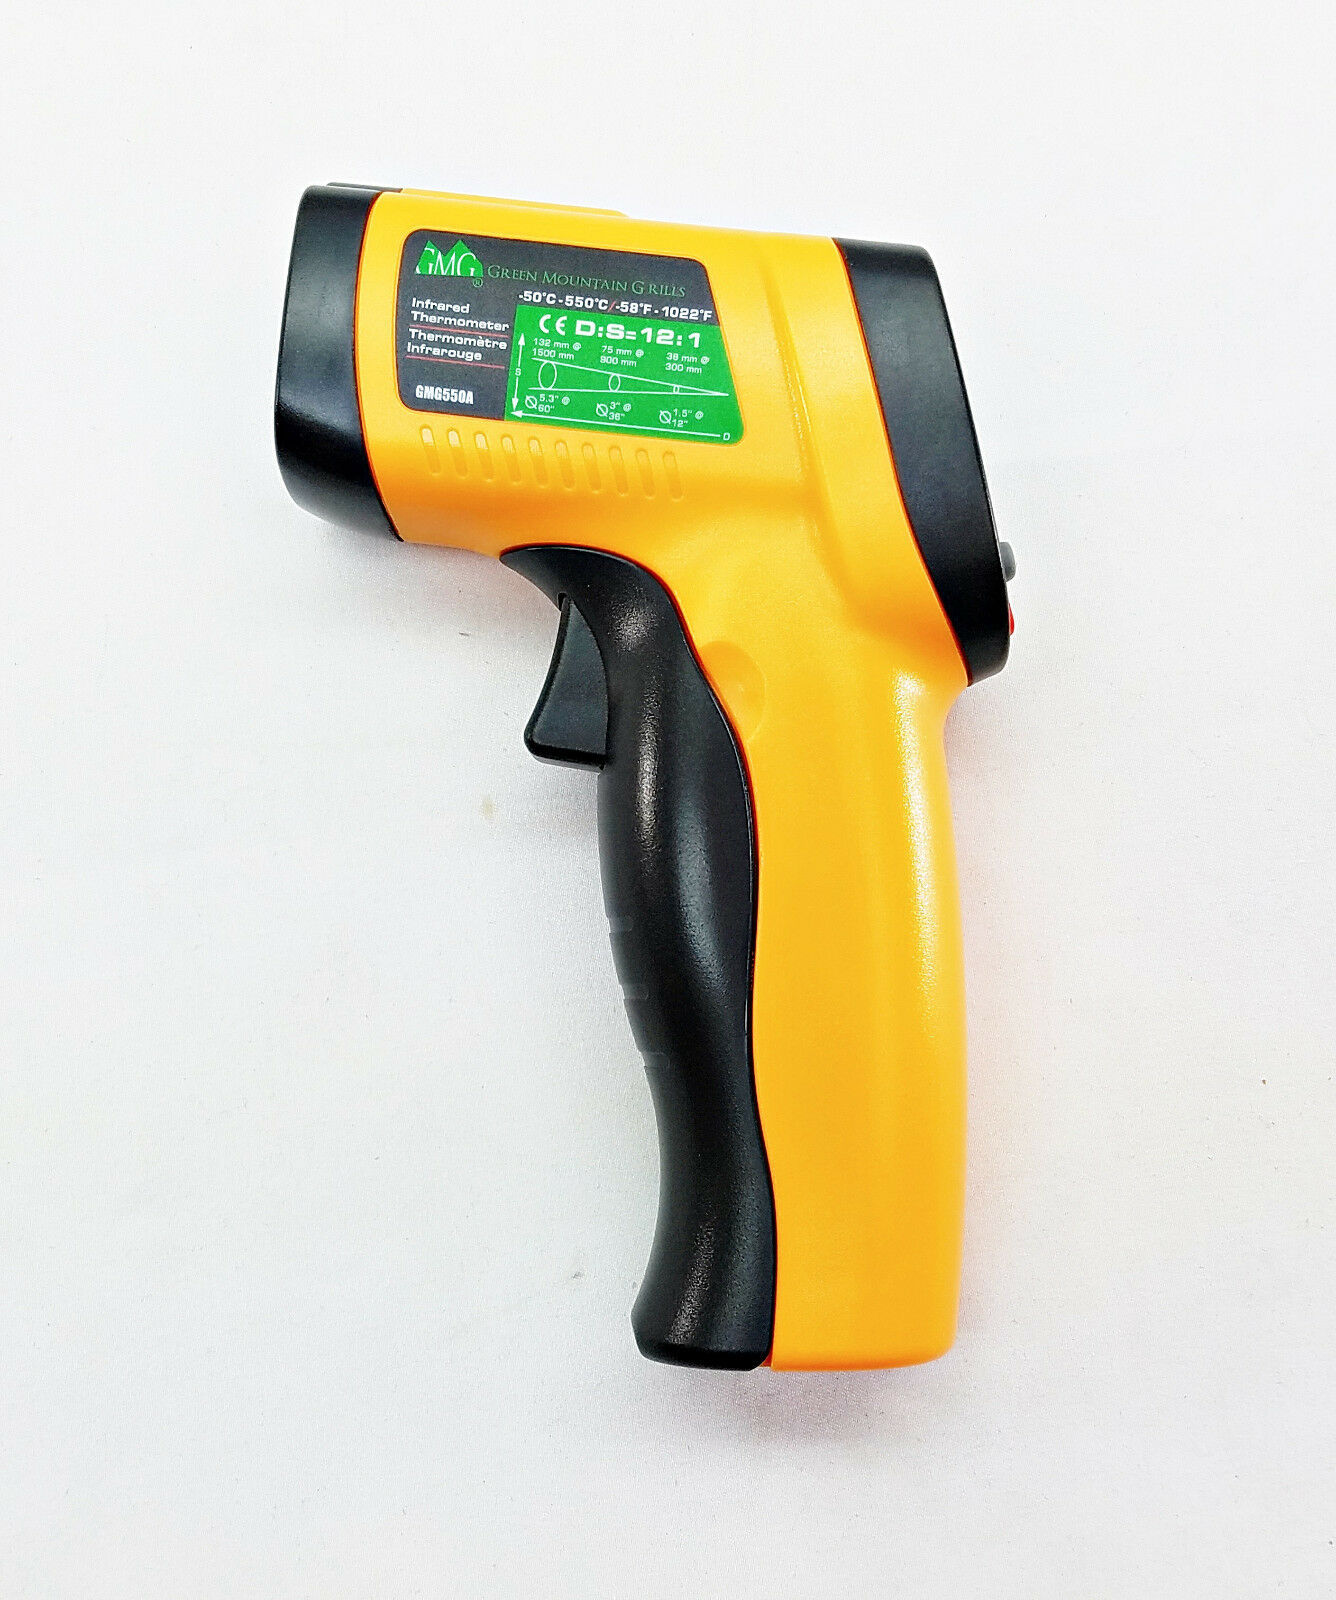 Gmg Temp Gun Heat Temperature Gun With Digital Readout Infrared Laser Gmg 4025 Bbq Tools 6415